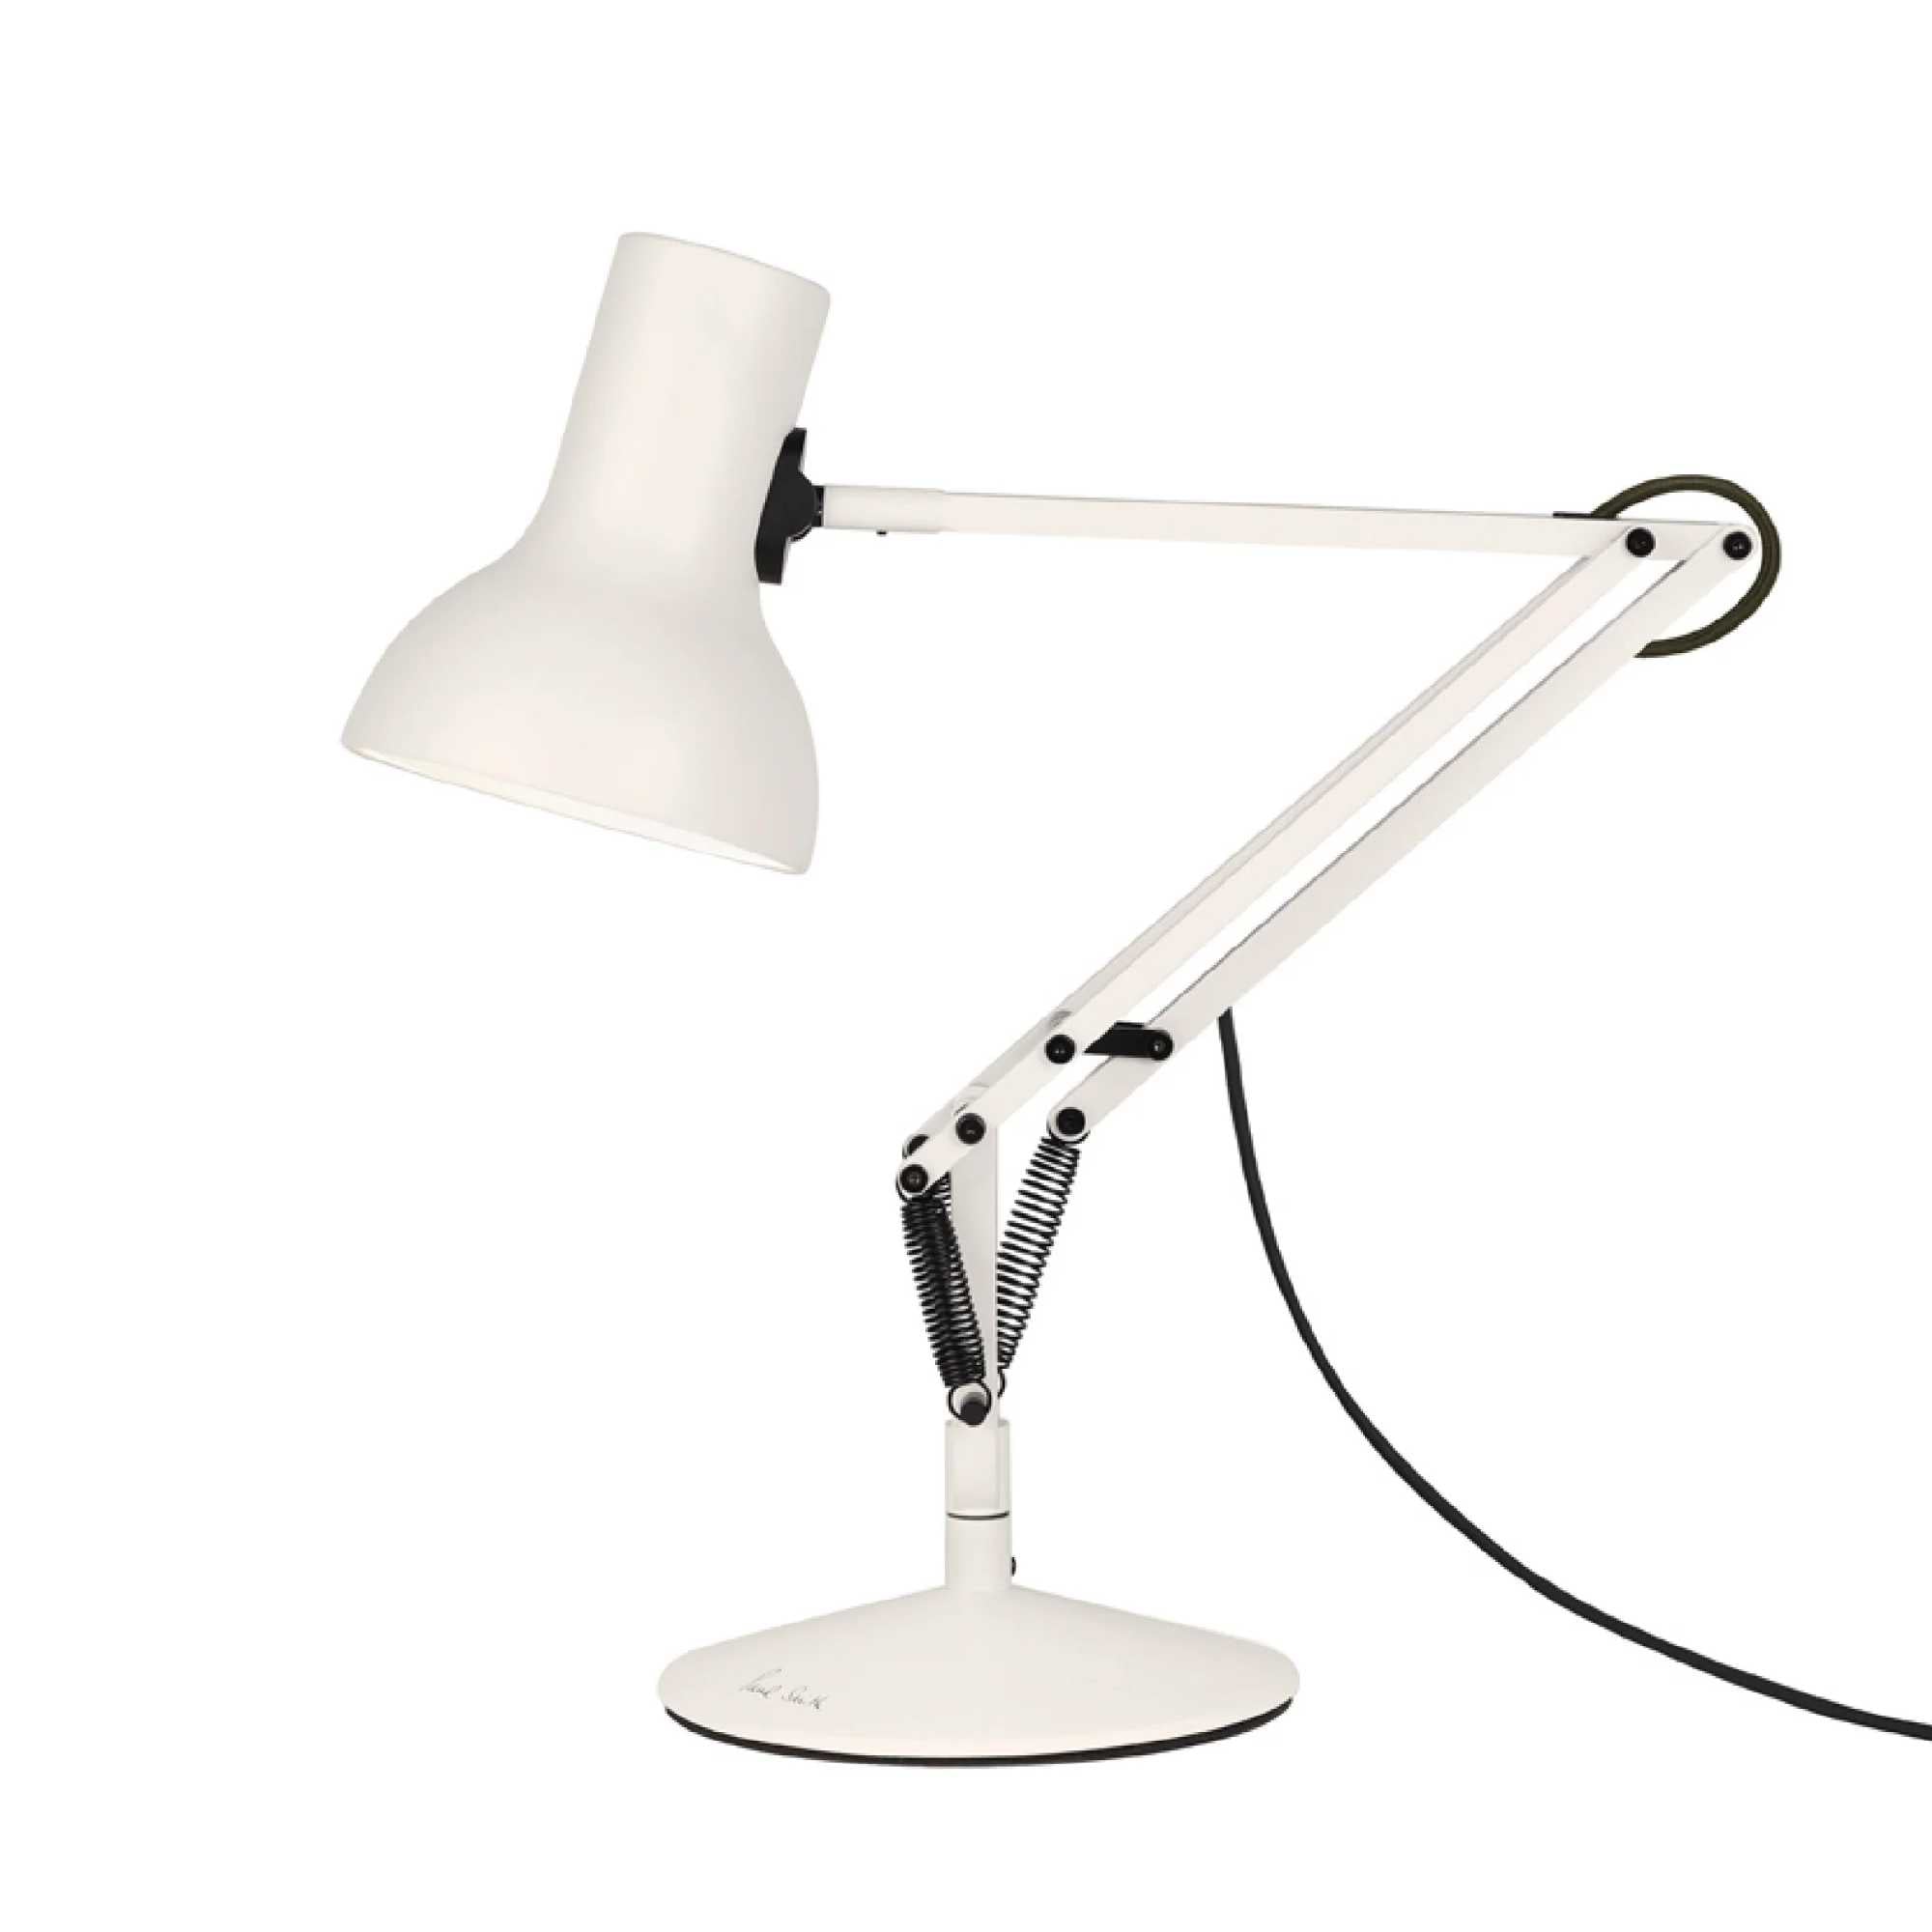 Paul Smith Anglepoise Type75 Mini Desk Lamp, Edition 6